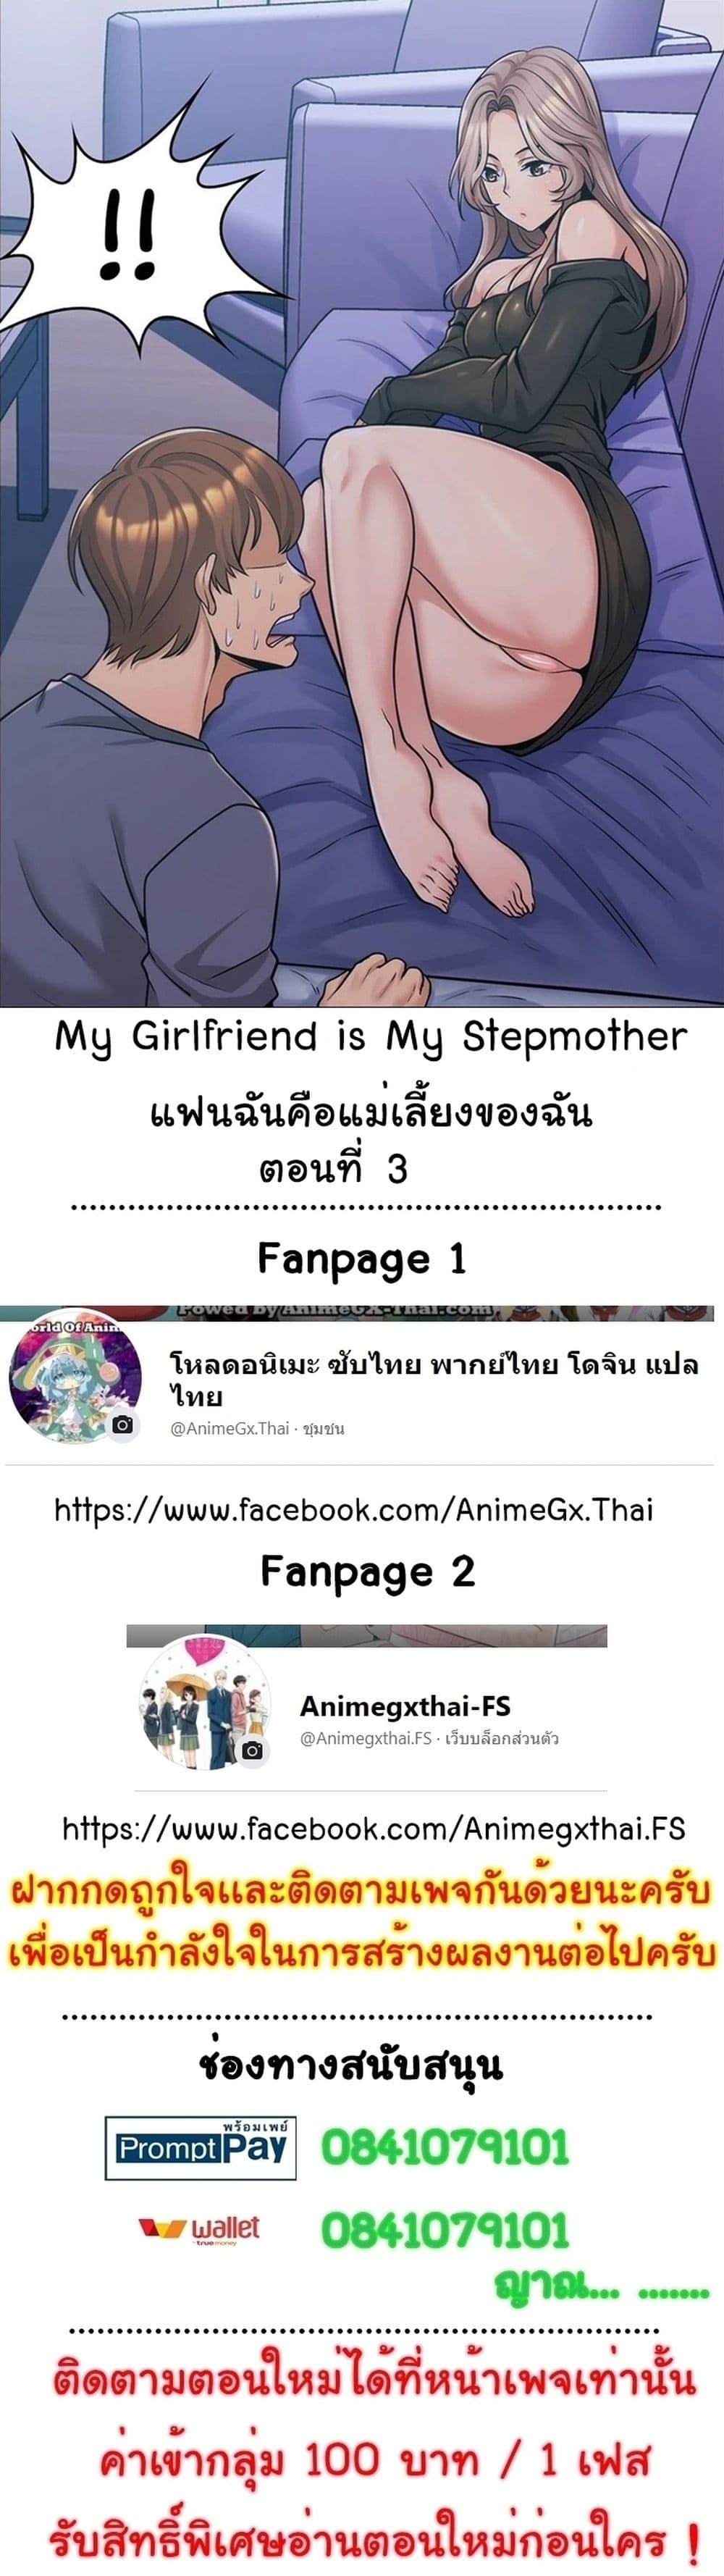 My Girlfriend is My Stepmother3 (1)